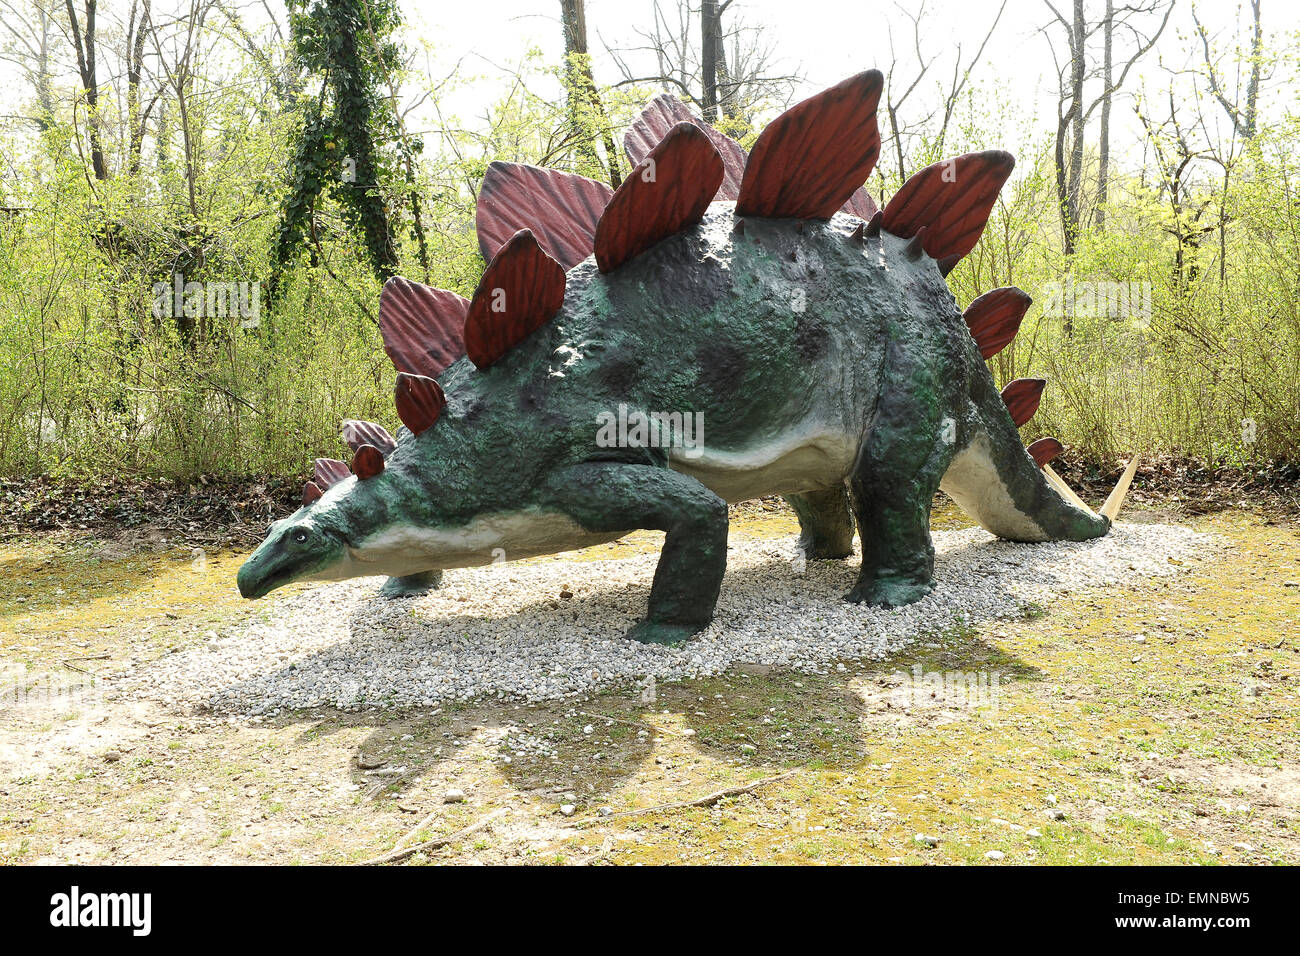 Stegosaurus Dinosaur from Late Jurassic Period in Outdoor Prehistoric Theme Park Stock Photo